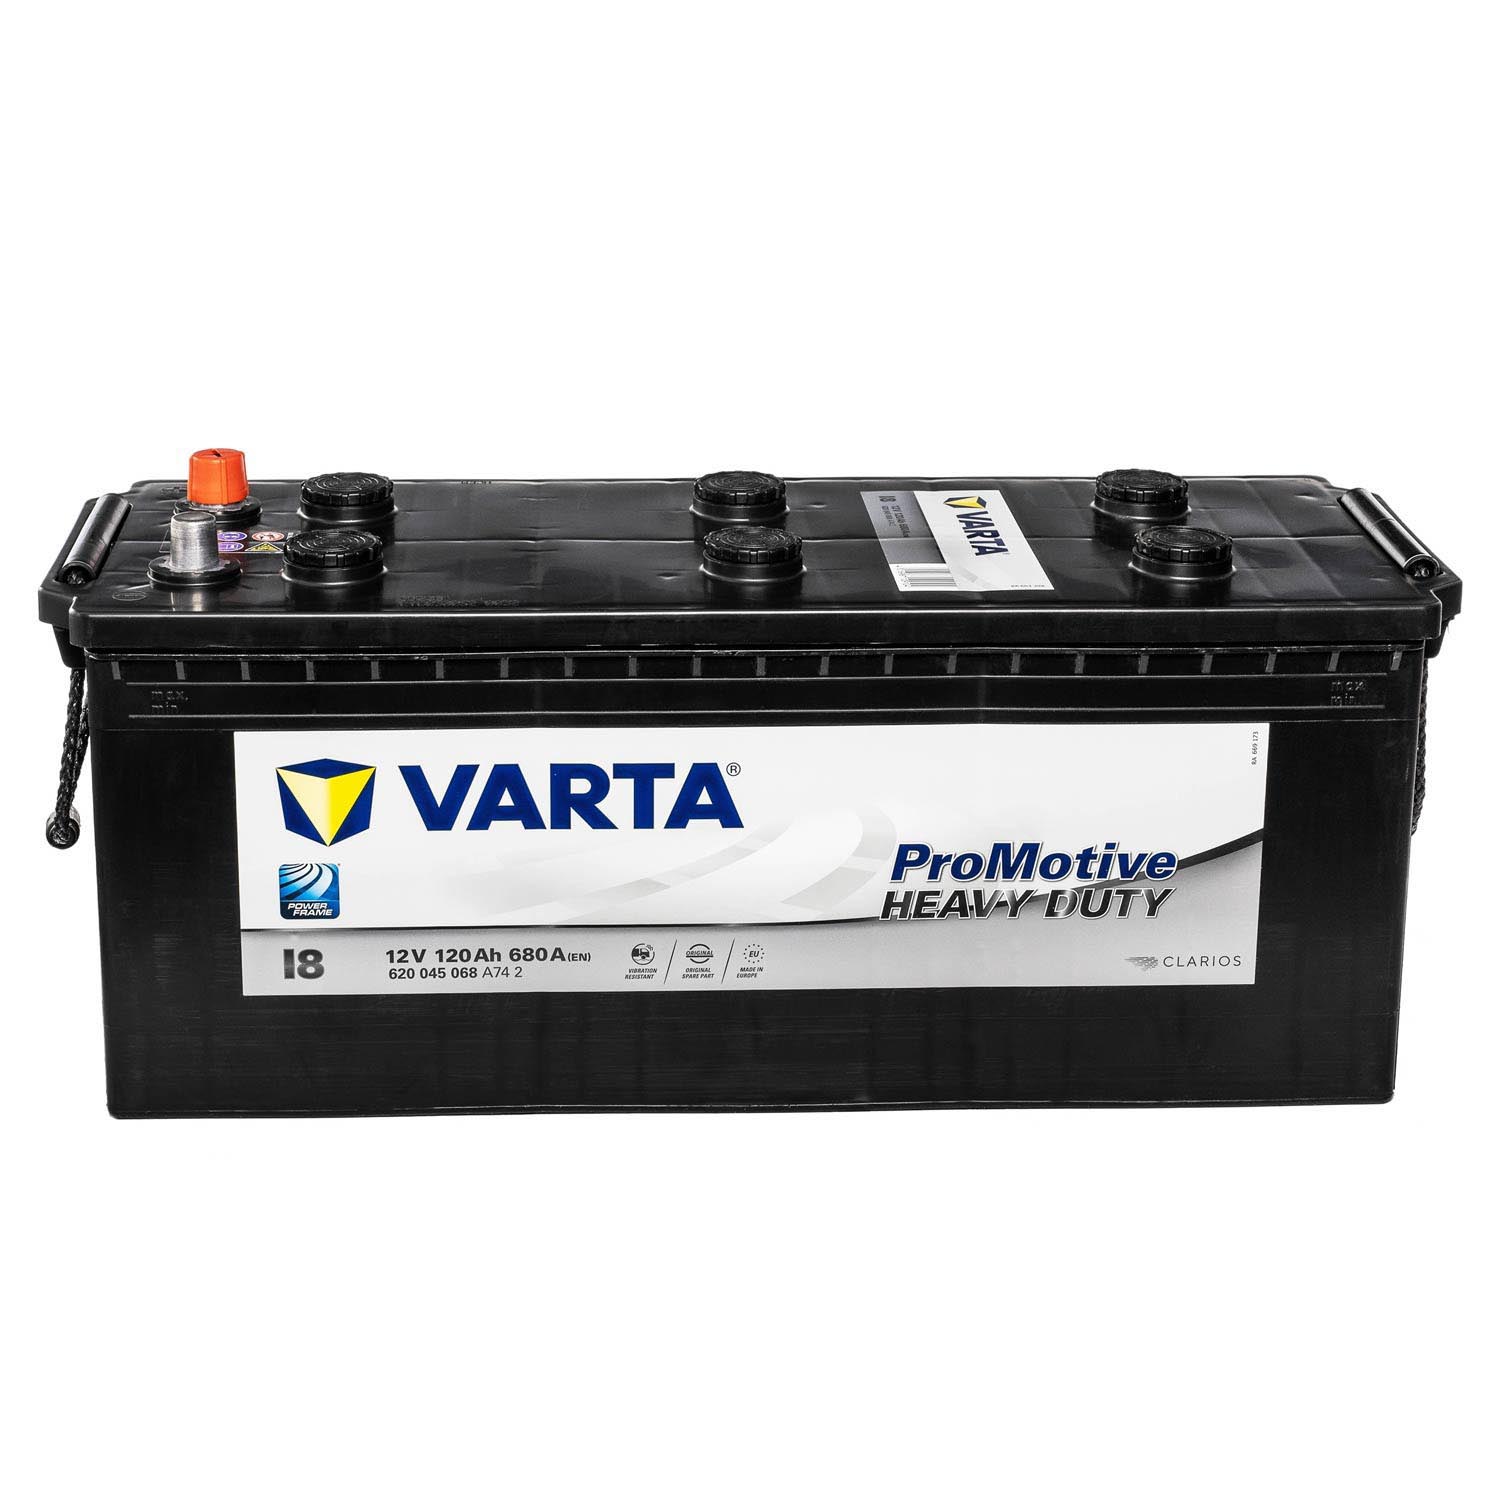 VARTA Promotive Black I8 12V 120Ah LKW-Batterie